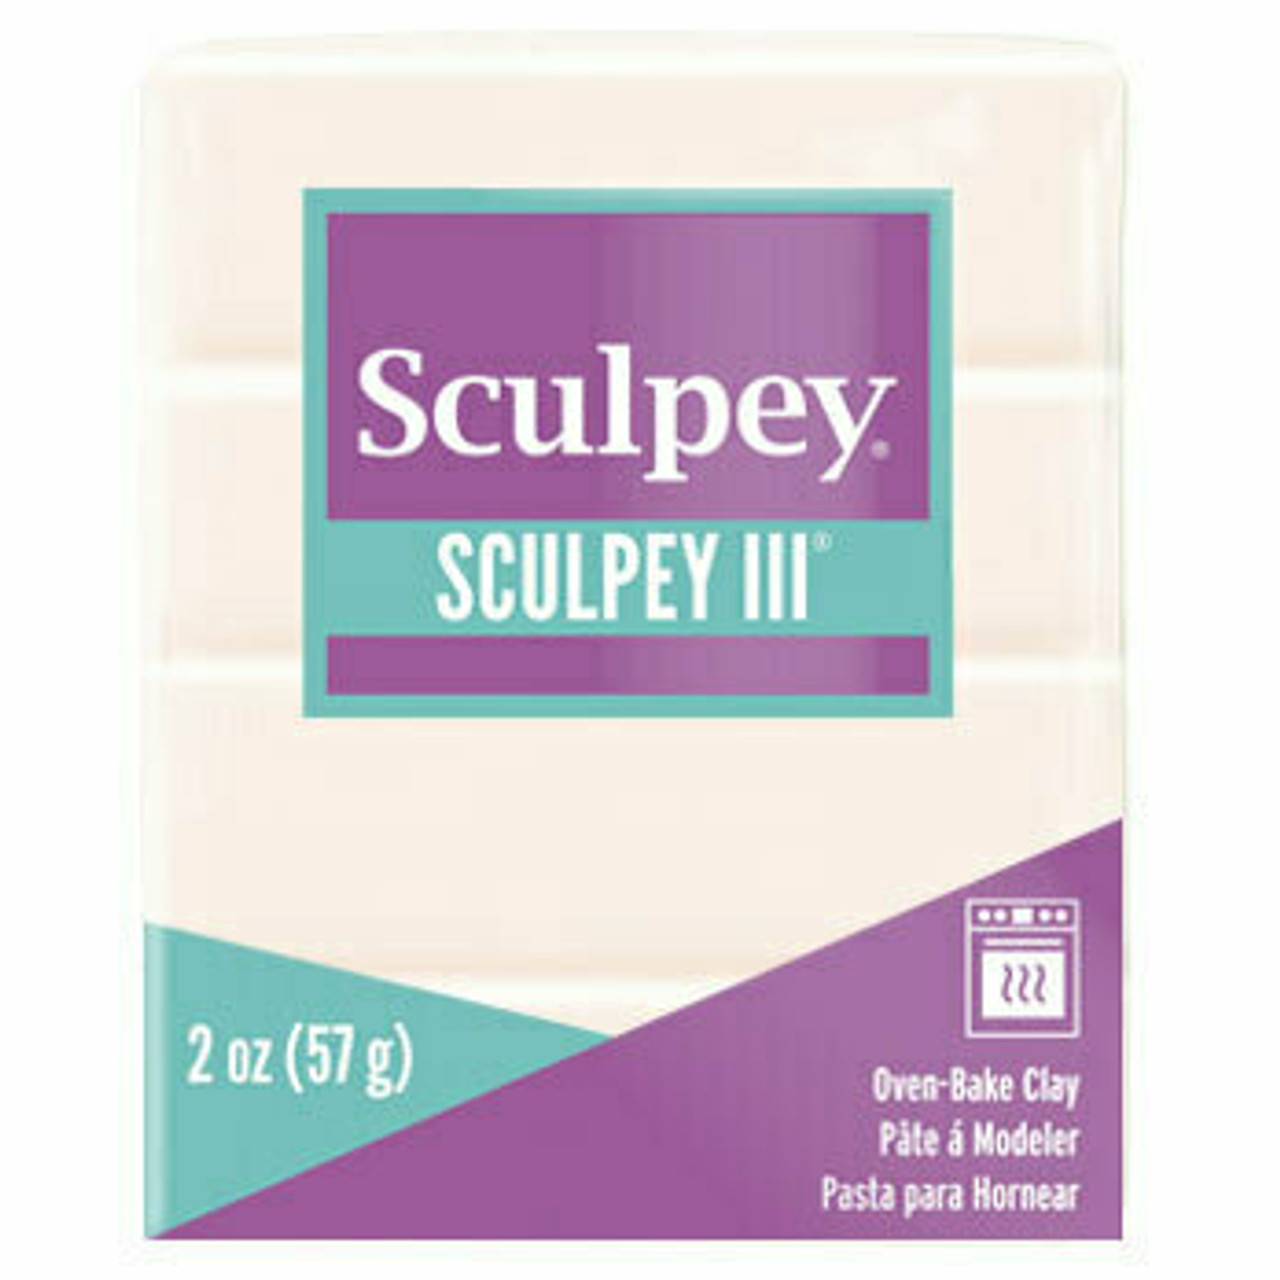 Sculpey III Beige 2oz (57g)